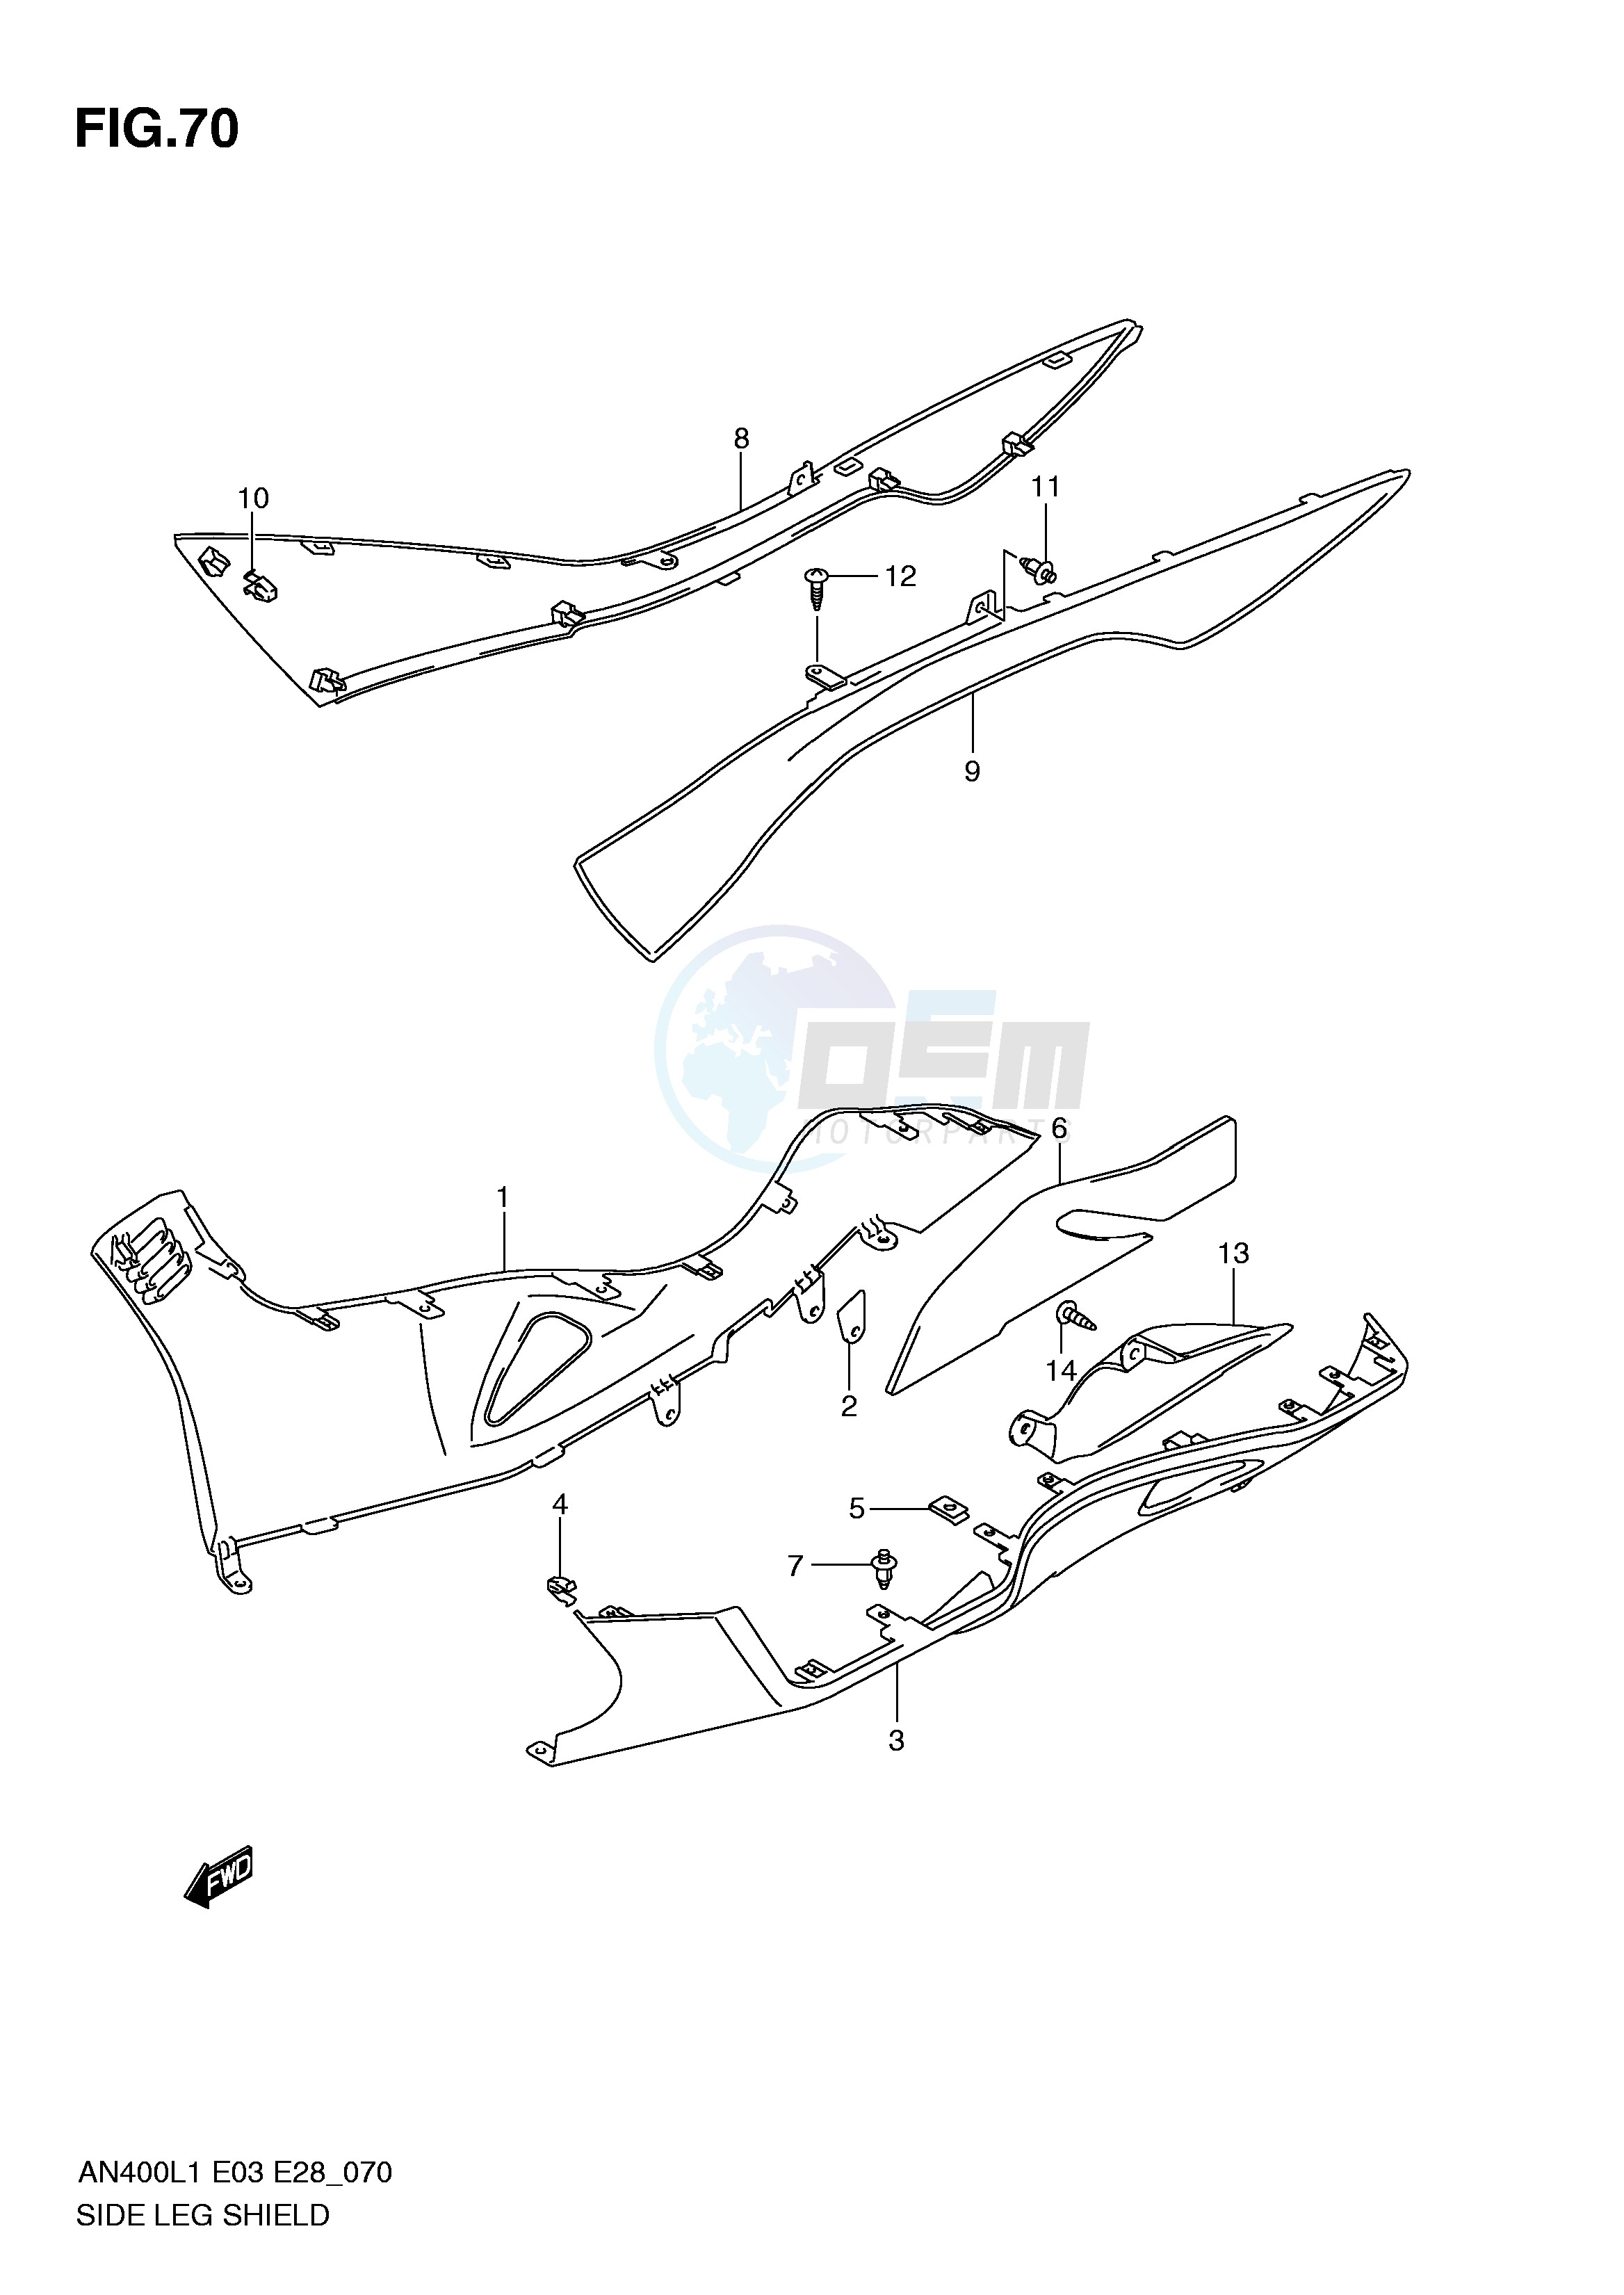 SIDE LEG SHIELD (AN400ZAL1 E28) blueprint